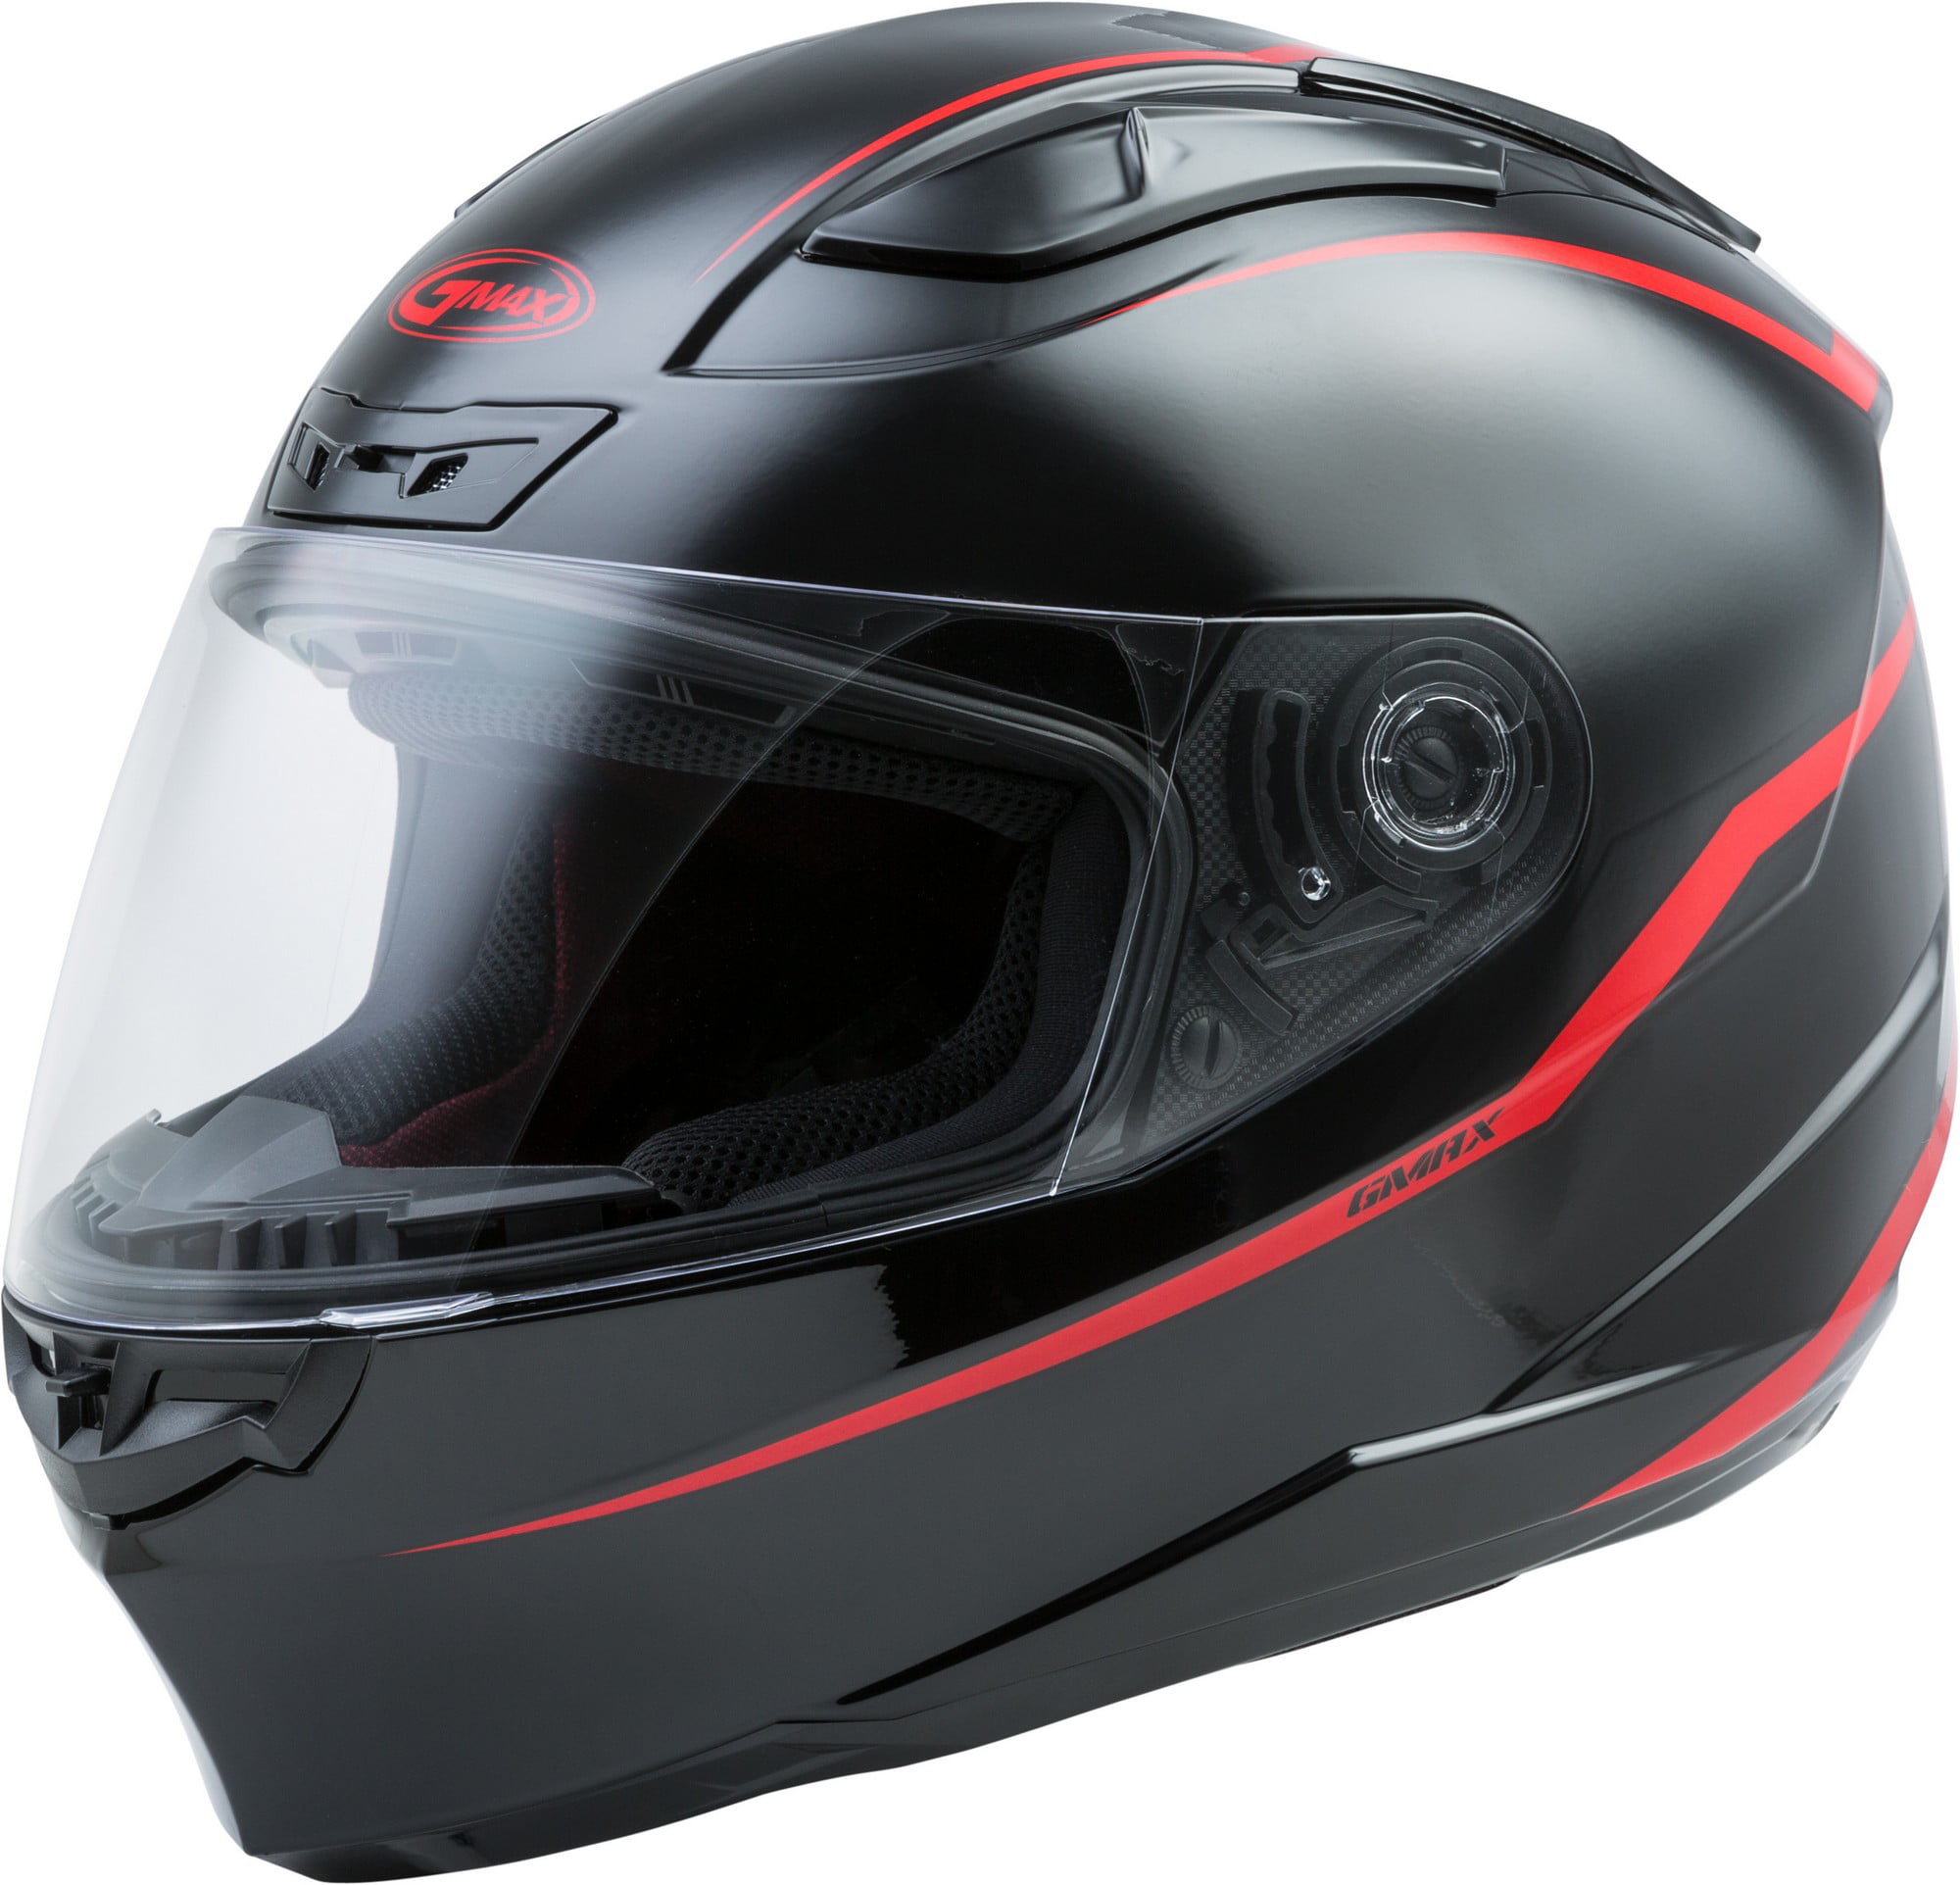 GMAX FF88 Helmet Motorcycle Street Sport Bike Cruiser Chopper DOT Approved 